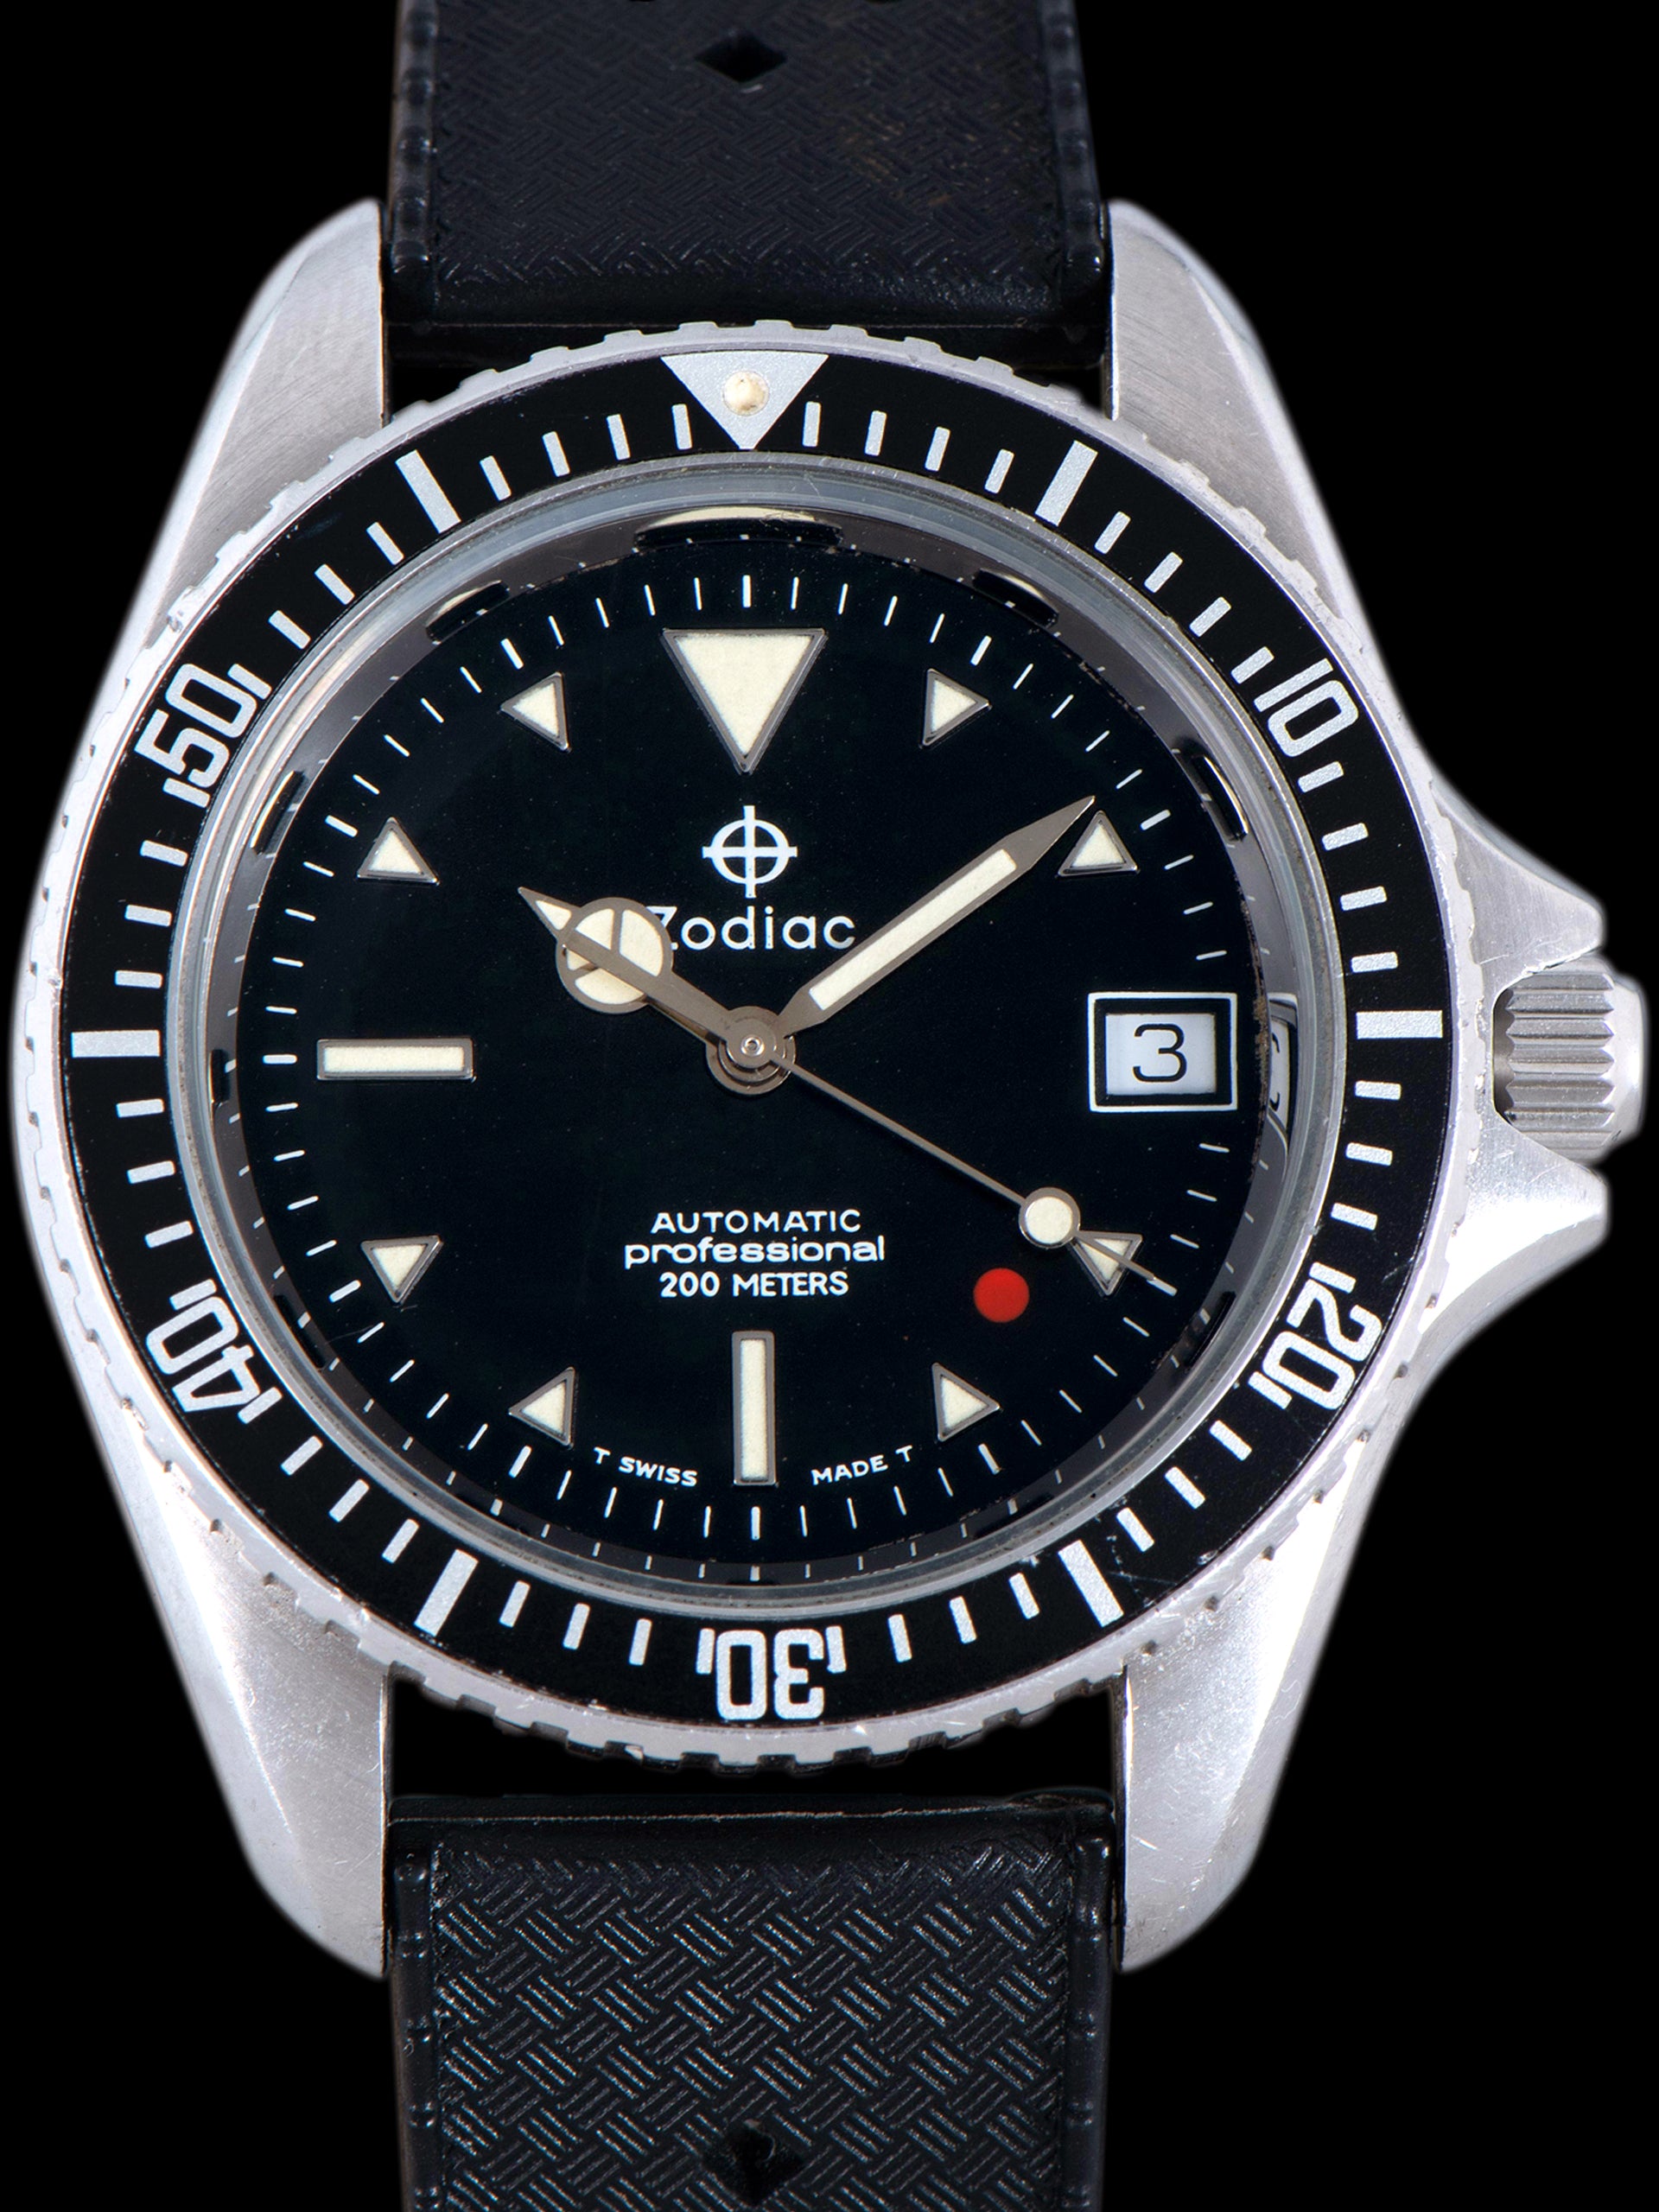 1990s Zodiac Red Dot Dive Watch (Ref. 113.13.30) W/ Box